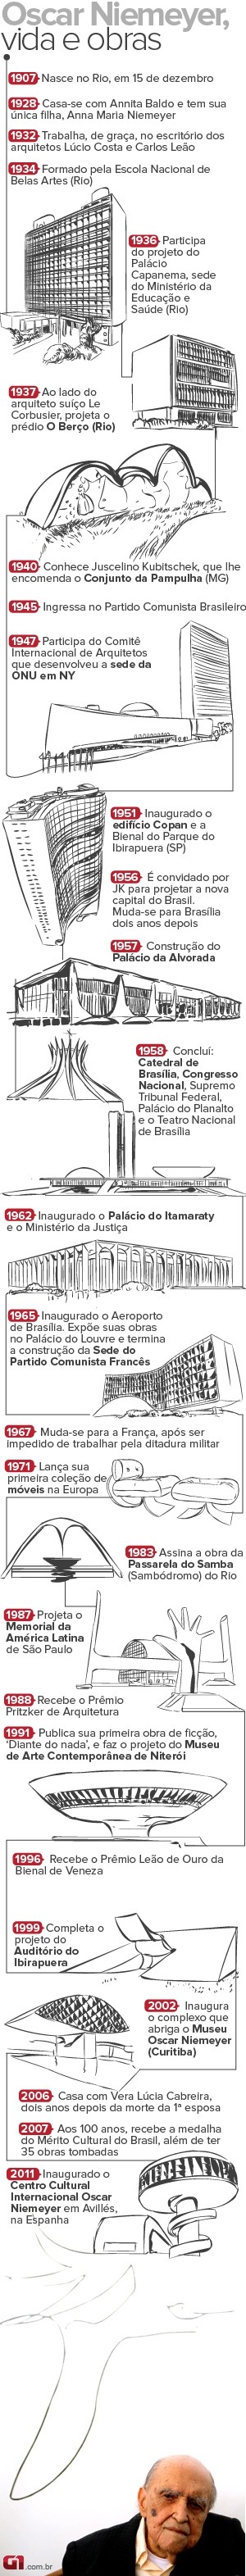 VALE ESTE Vida e Obras de Niemeyer (Foto: Arte/G1)